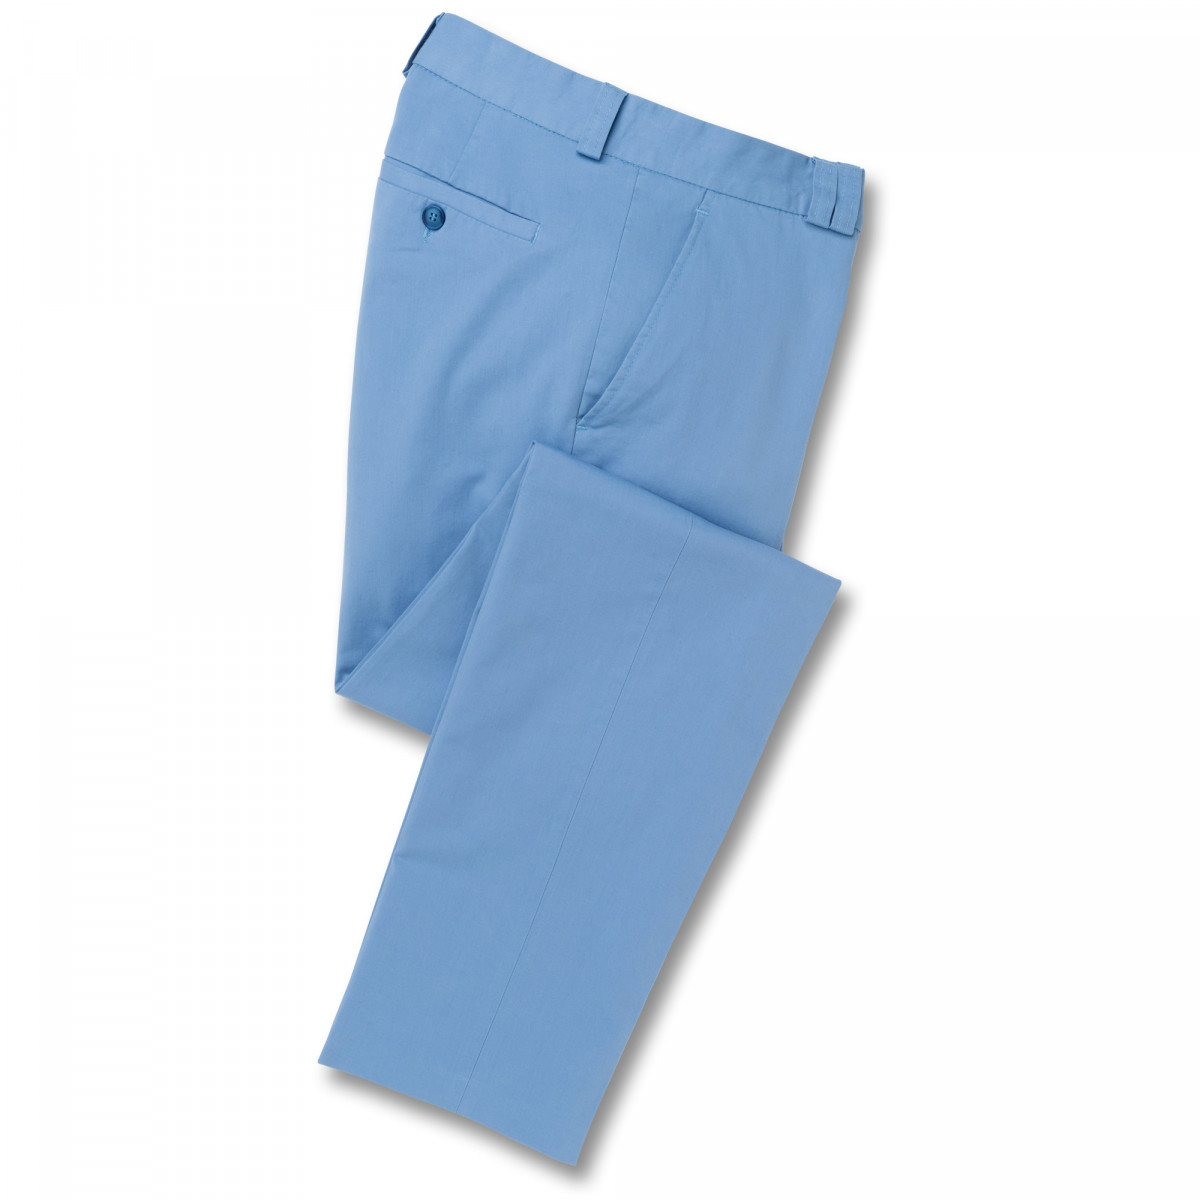 Pantalon coton extensible 60 Bleu ciel